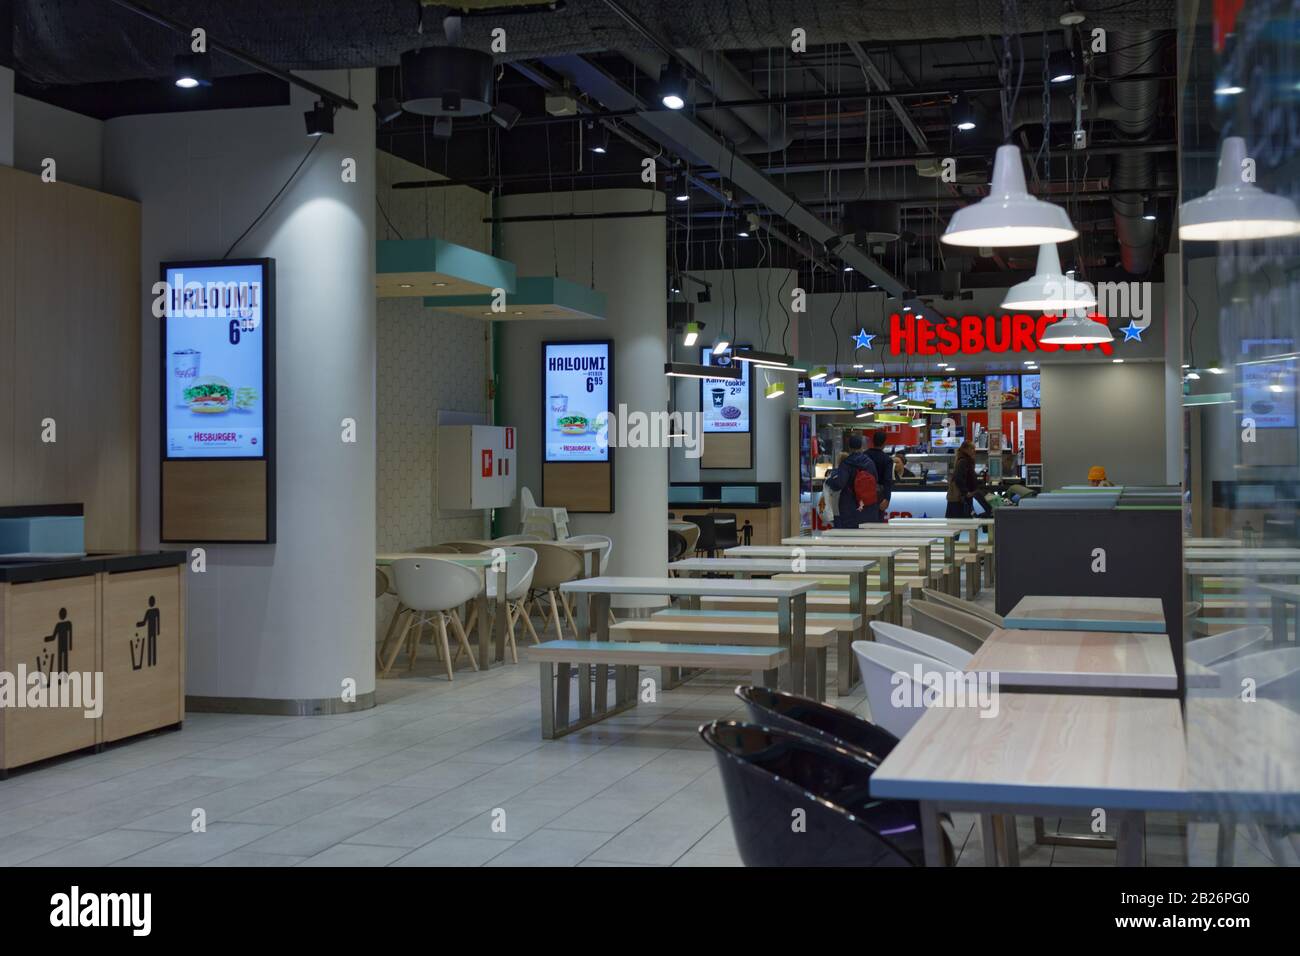 Hesburger fast food restaurant interior in Kamppi Center in Helsinki,  Finland Stock Photo - Alamy